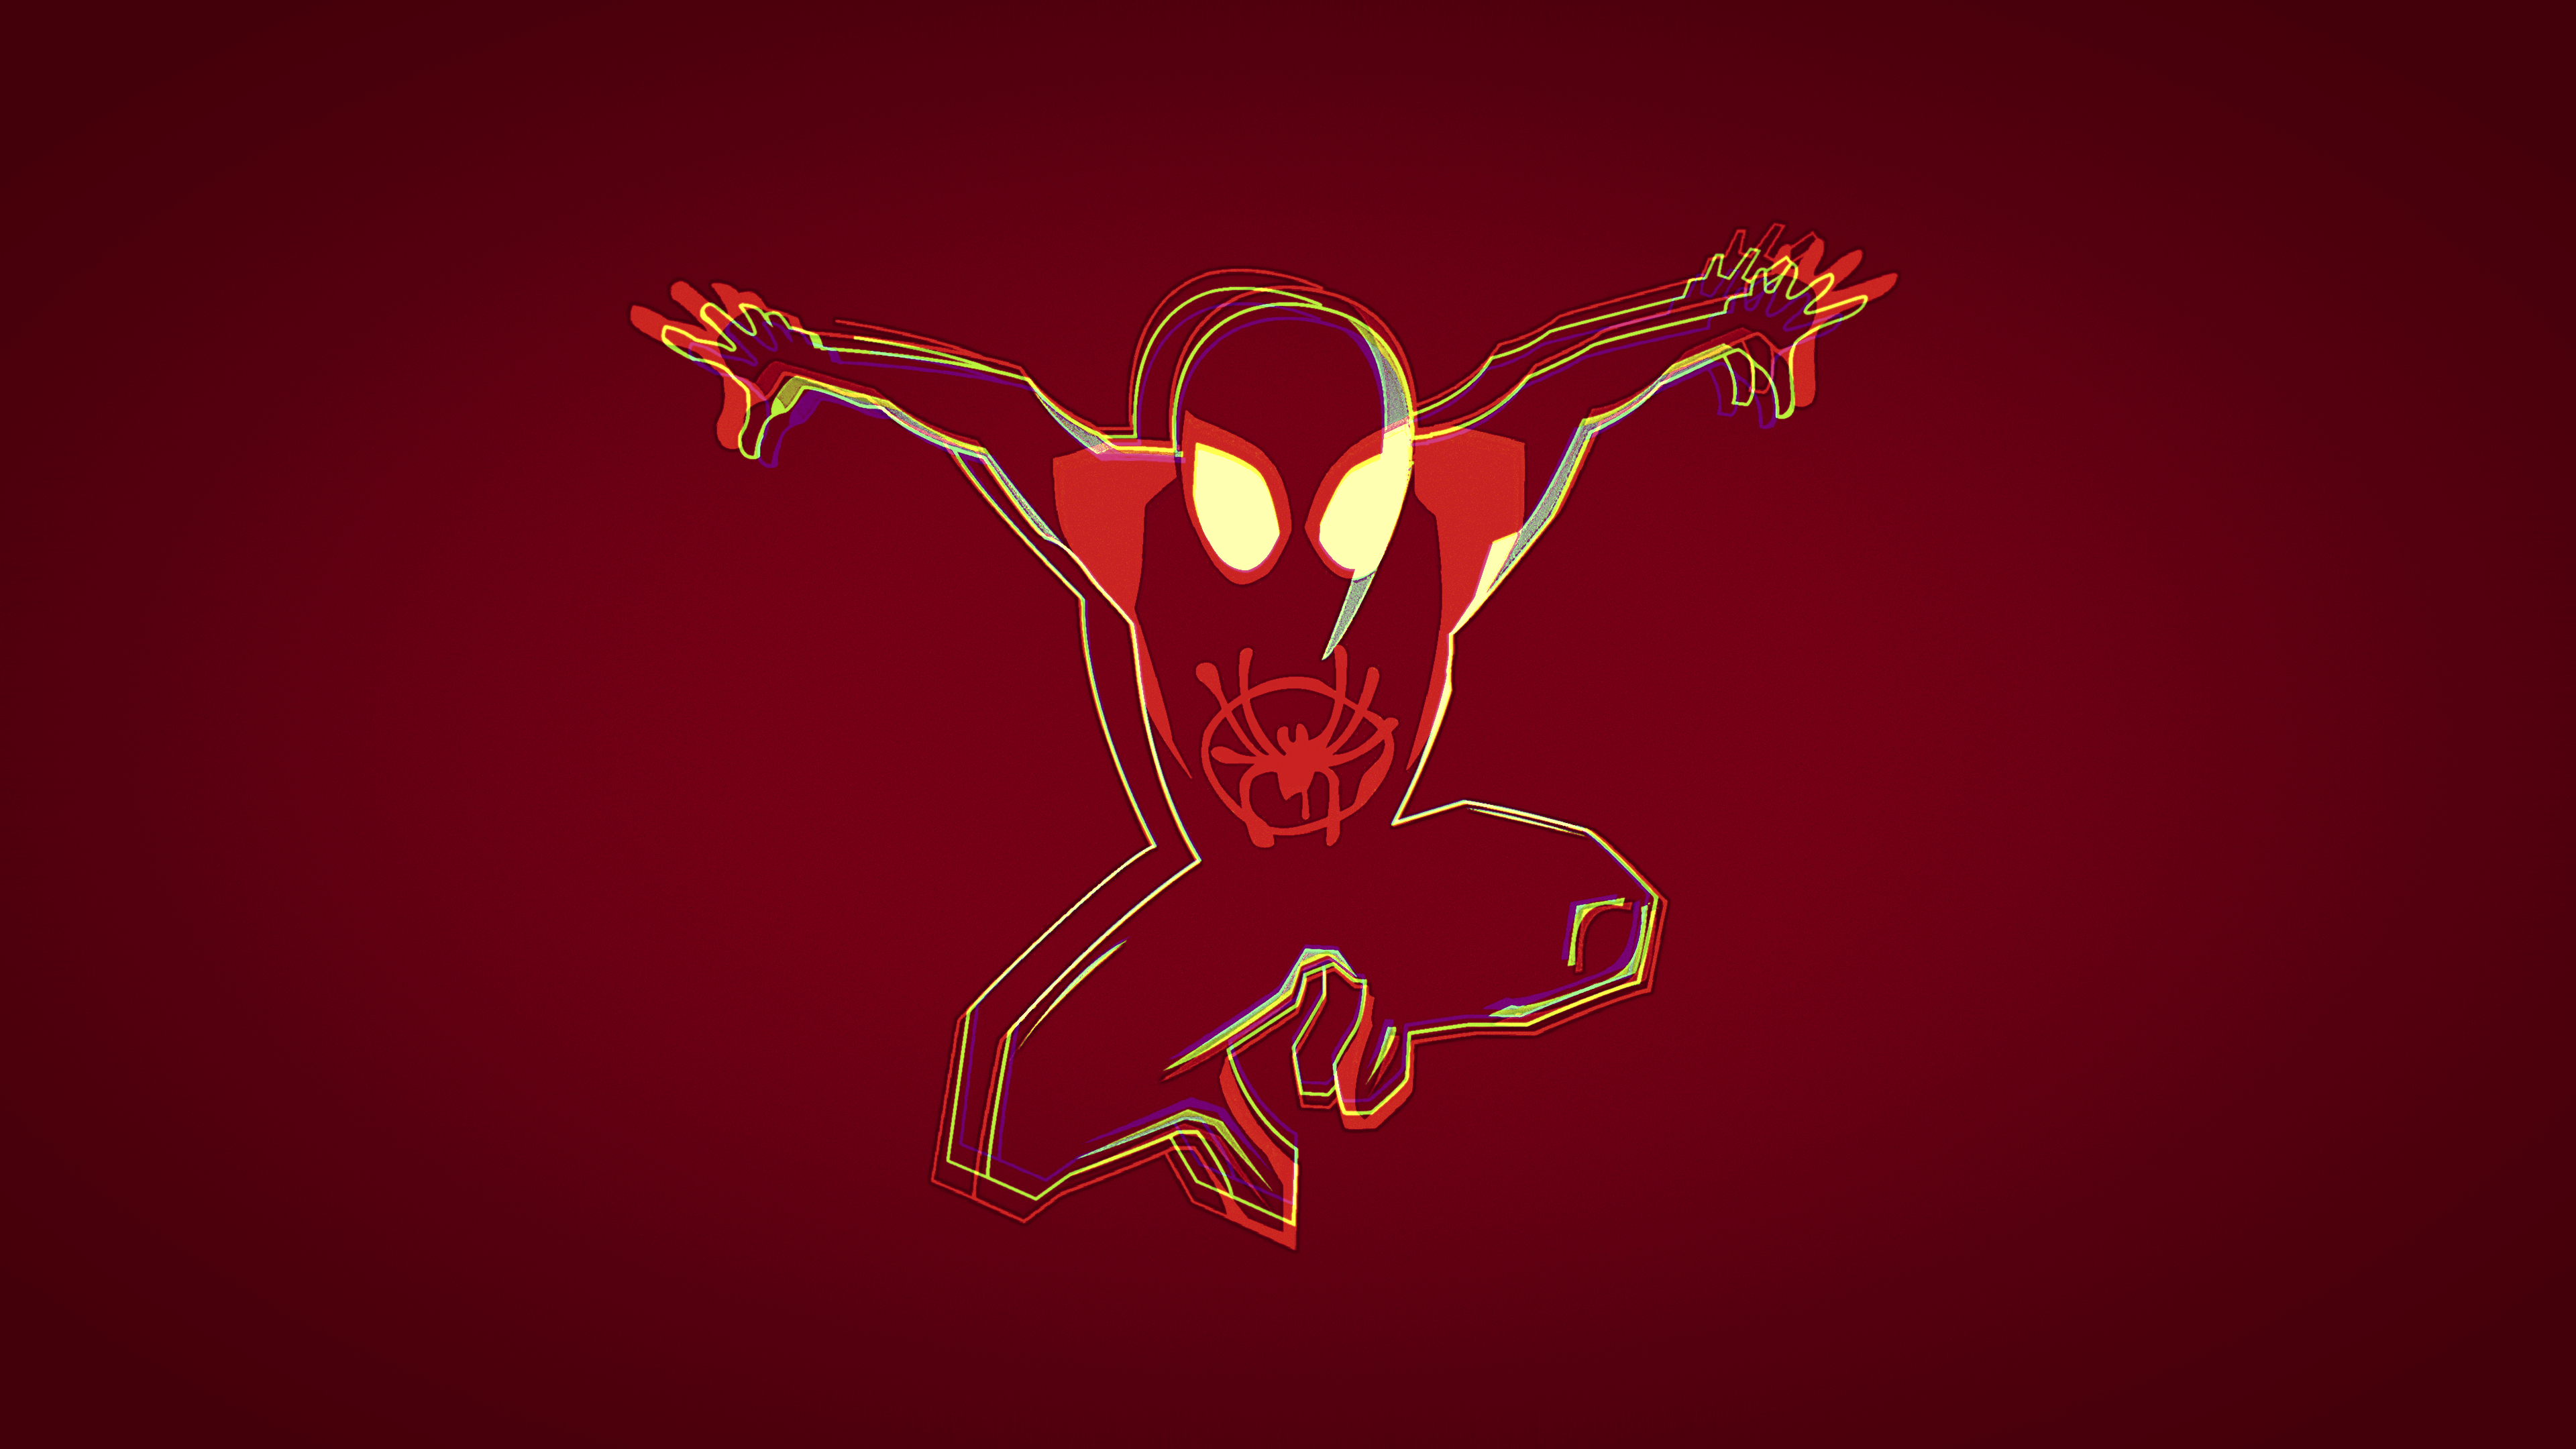 Minimalist Spiderman Into the Spider-Verse 4K Wallpaper, HD Minimalist ...